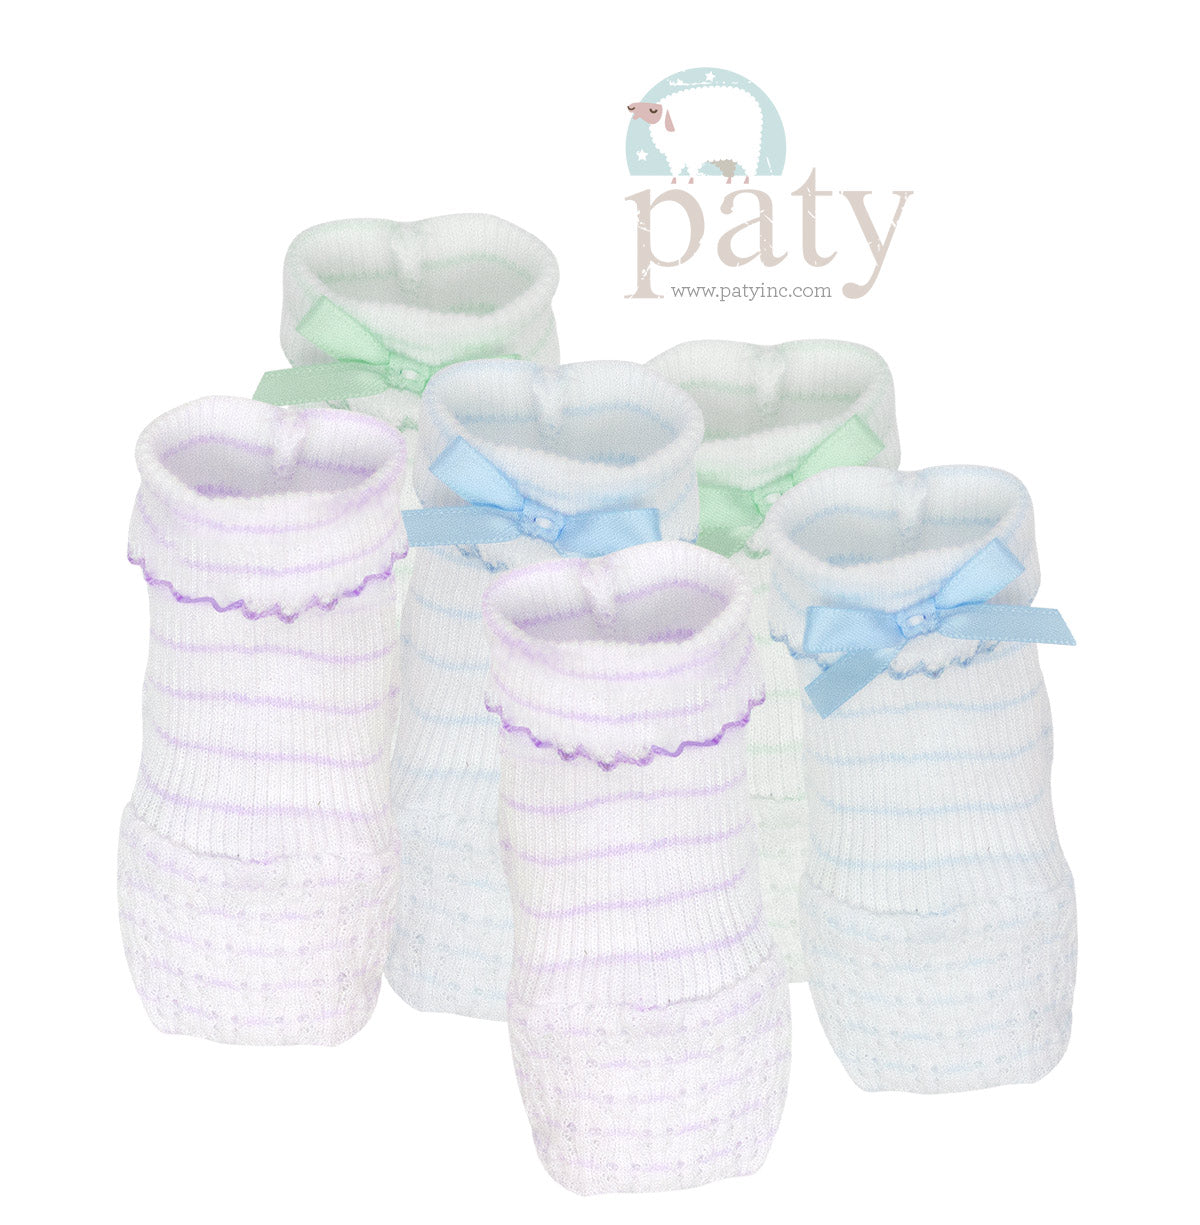 Pinstripe Paty Knit Booties #358